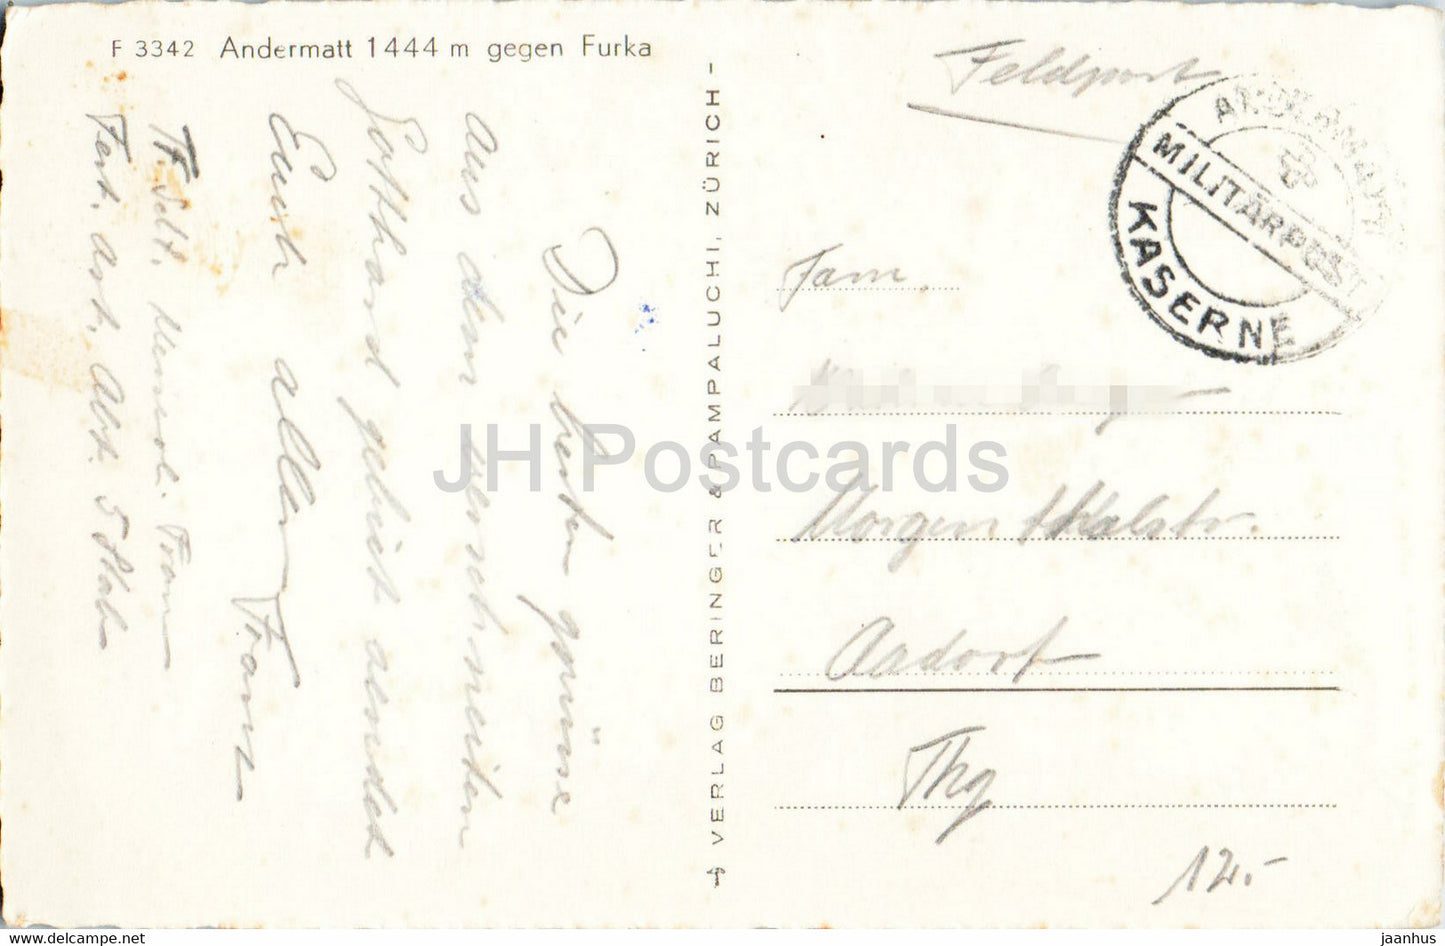 Andermatt 1444 m gegen Furka - 3342 - Feldpost - Militärpost - alte Postkarte - Schweiz - gebraucht